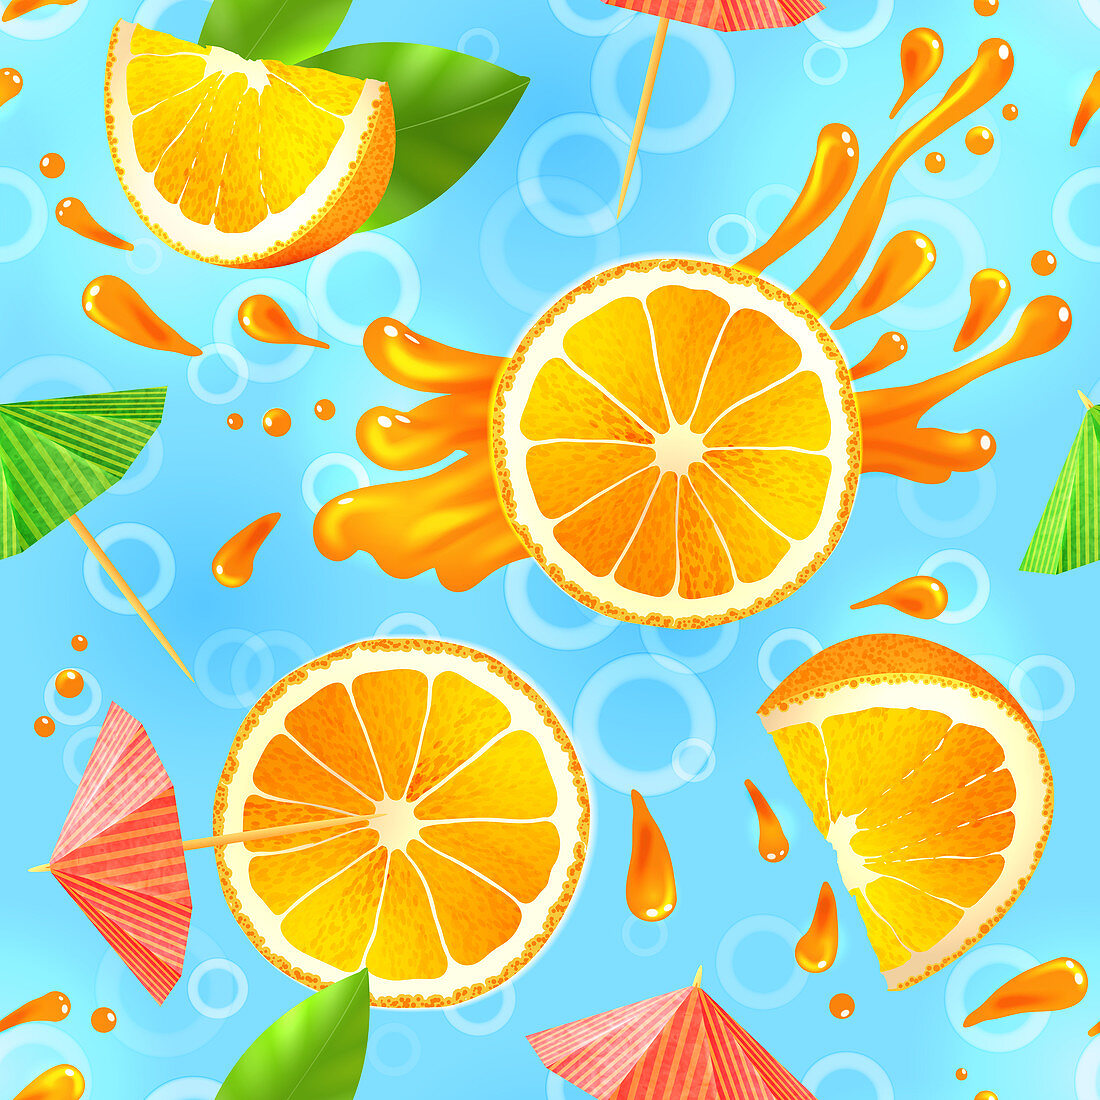 Orange slices, illustration